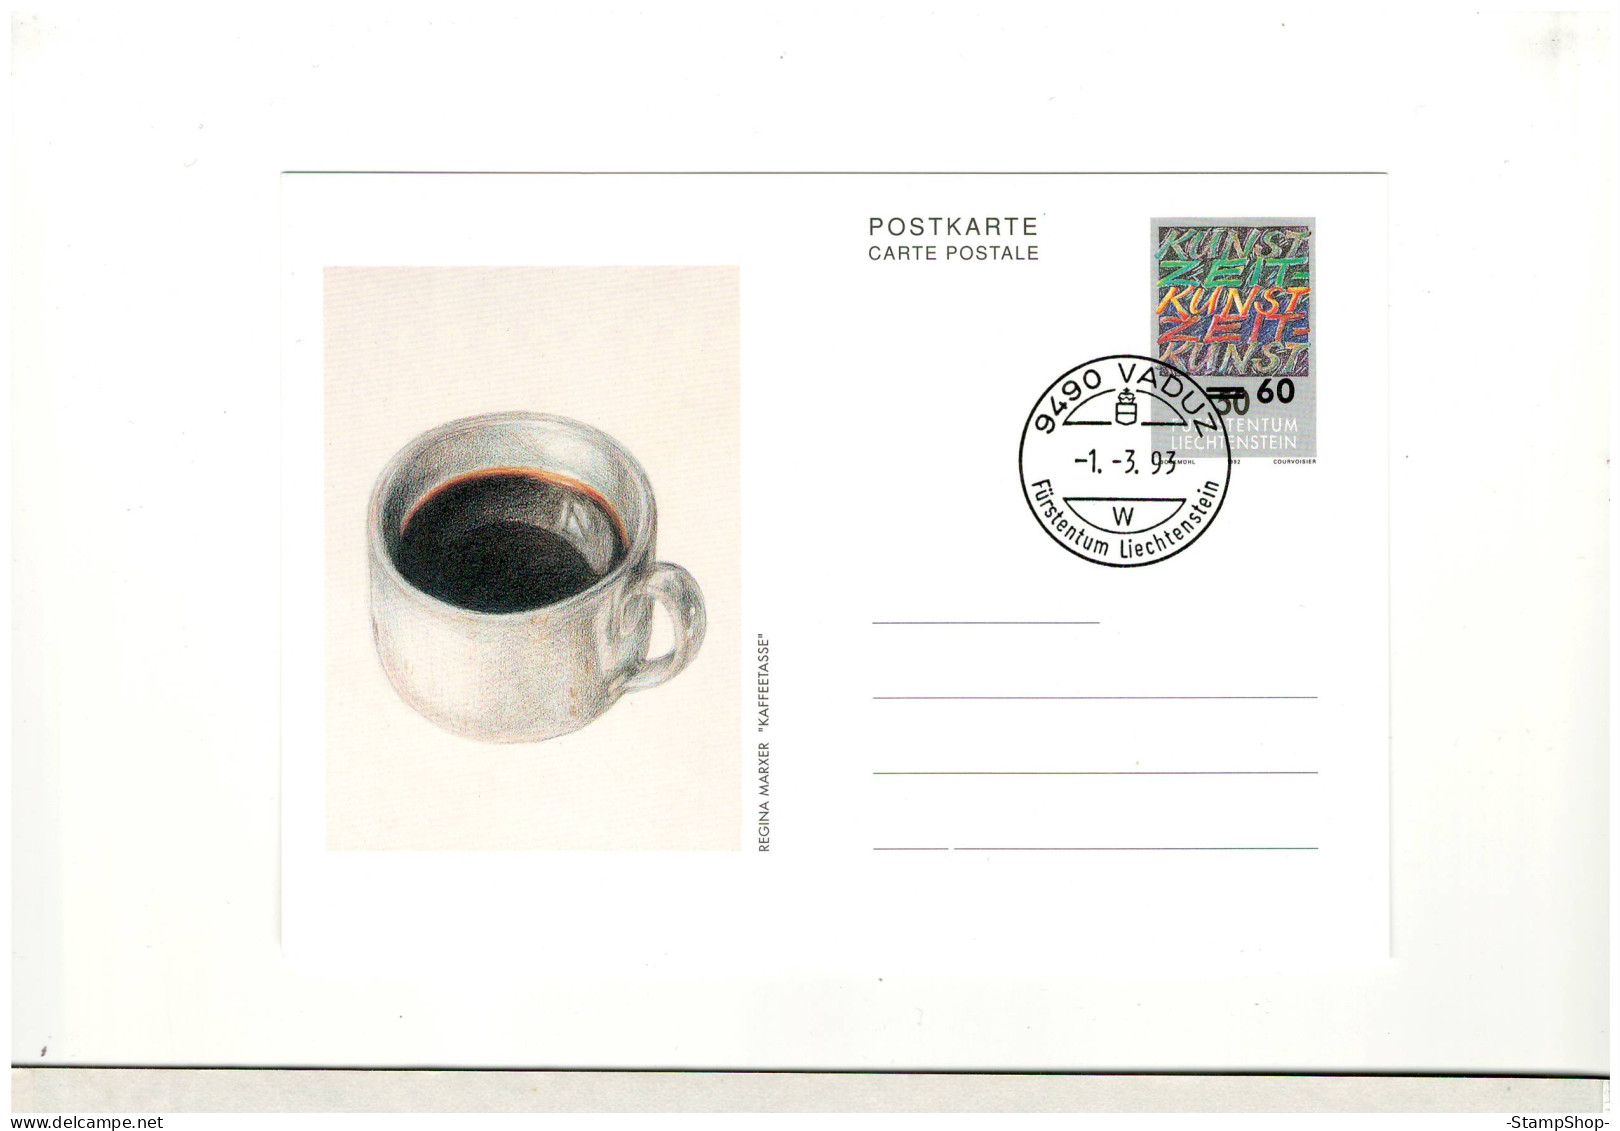 1993 Liechtenstein - Vaduz Postmark, Art, Overprint With Higher Value - Postcard - BX2052 - Covers & Documents